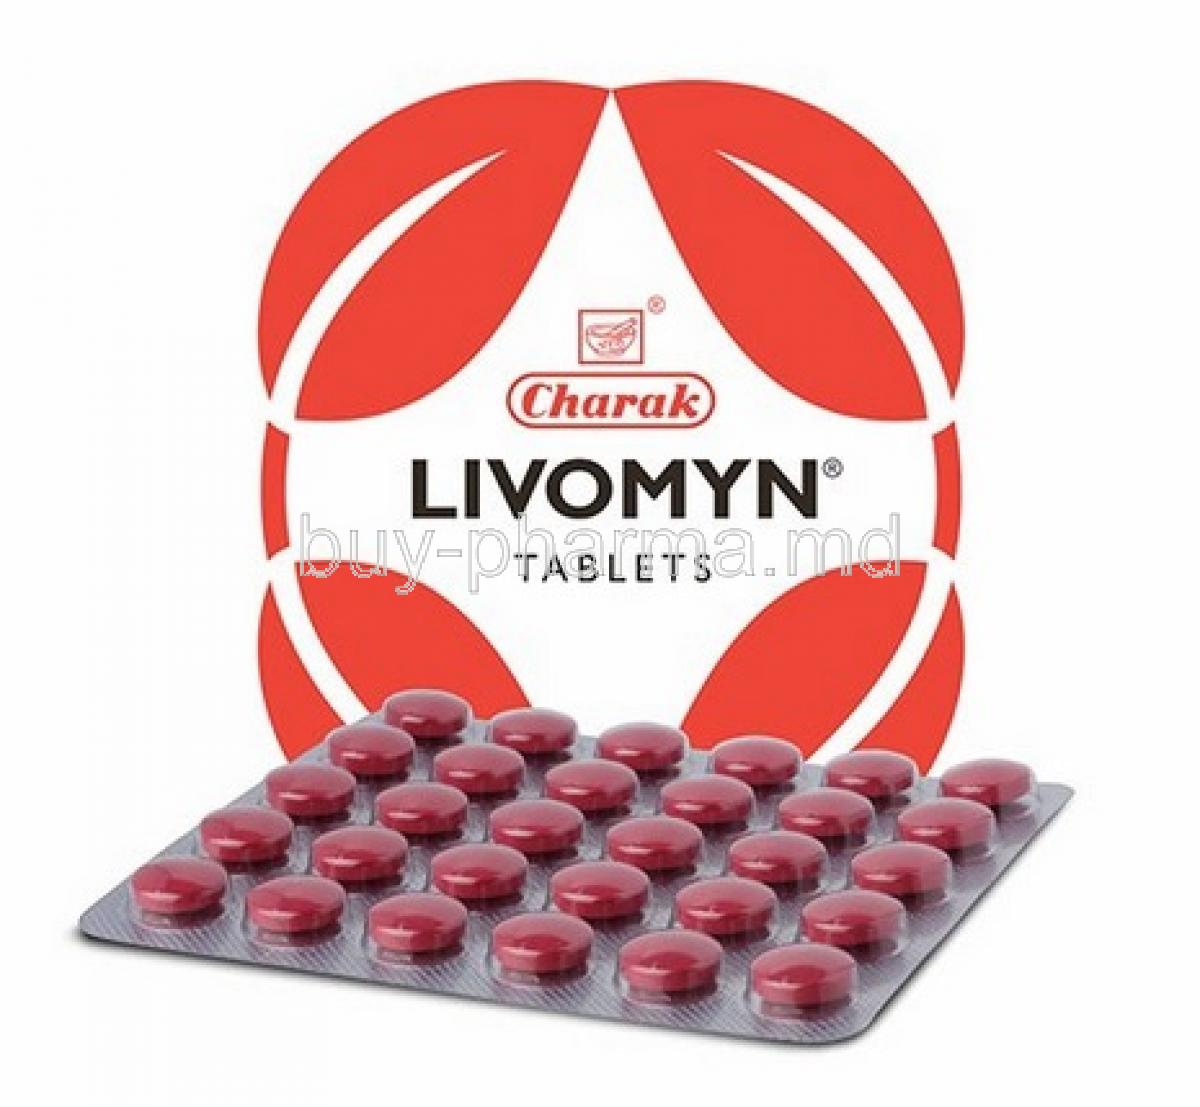 Livomyn box and tablets